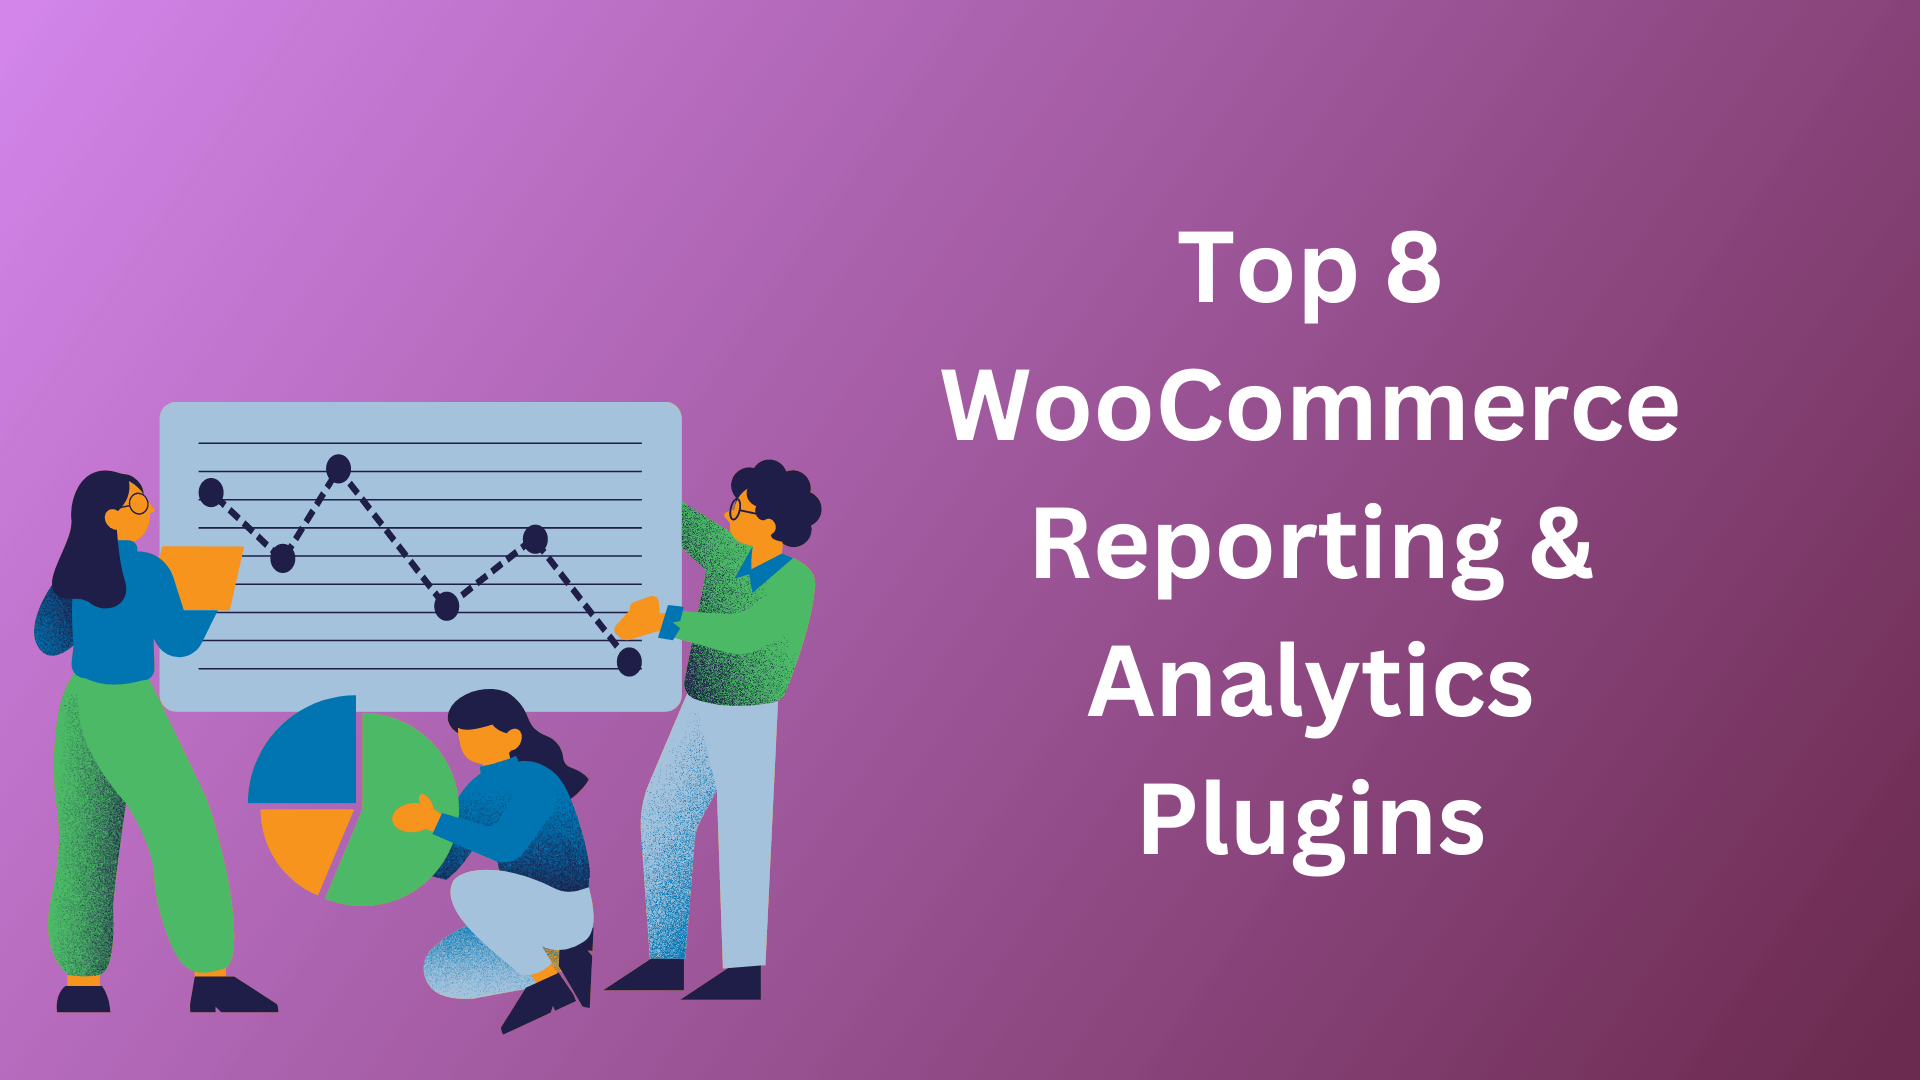 Top 8 WooCommerce Reporting & Analytics Plugins